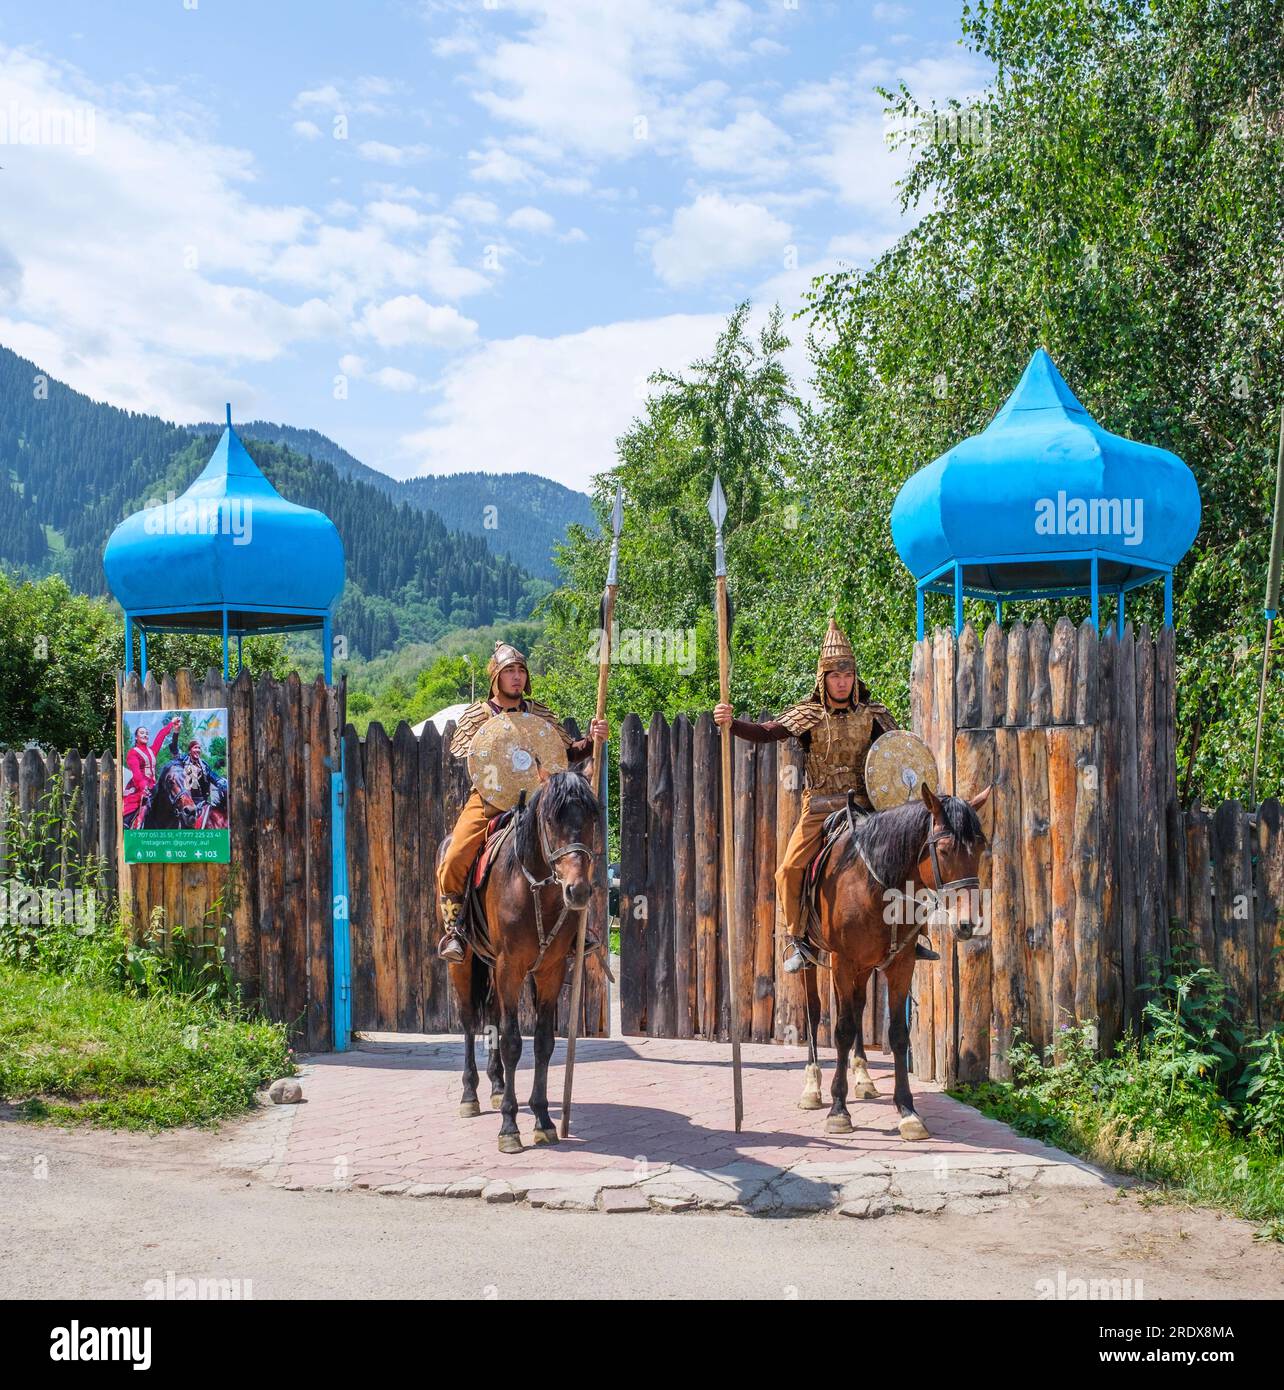 Kazakistan, Huns Ethno Village. Cavaliere in costume nomade all'ingresso dell'Ethno-Village. Foto Stock